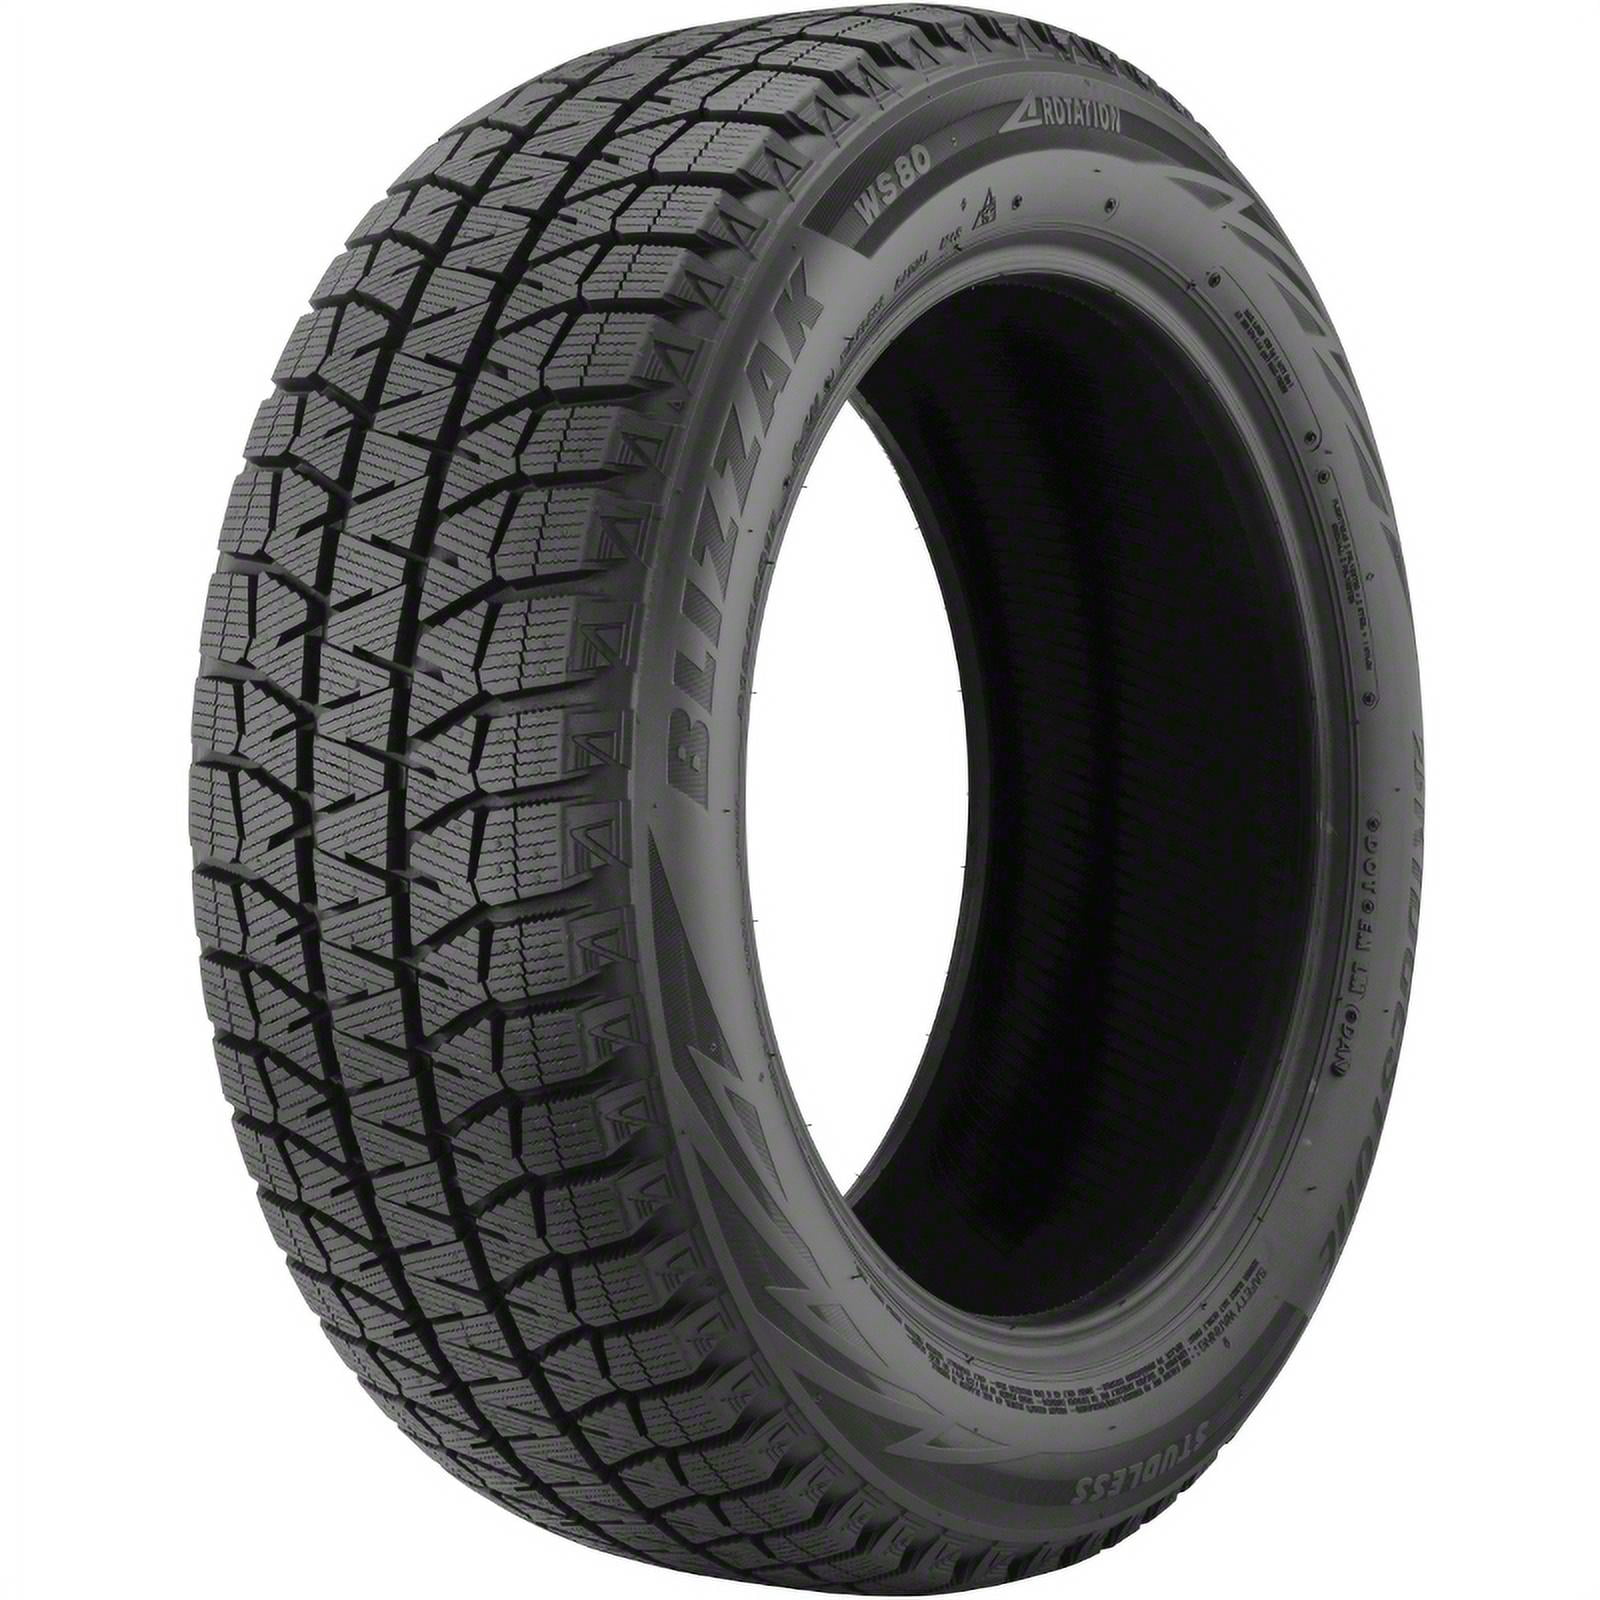 Bridgestone Blizzak WS80 215/70R15 98 T Tire